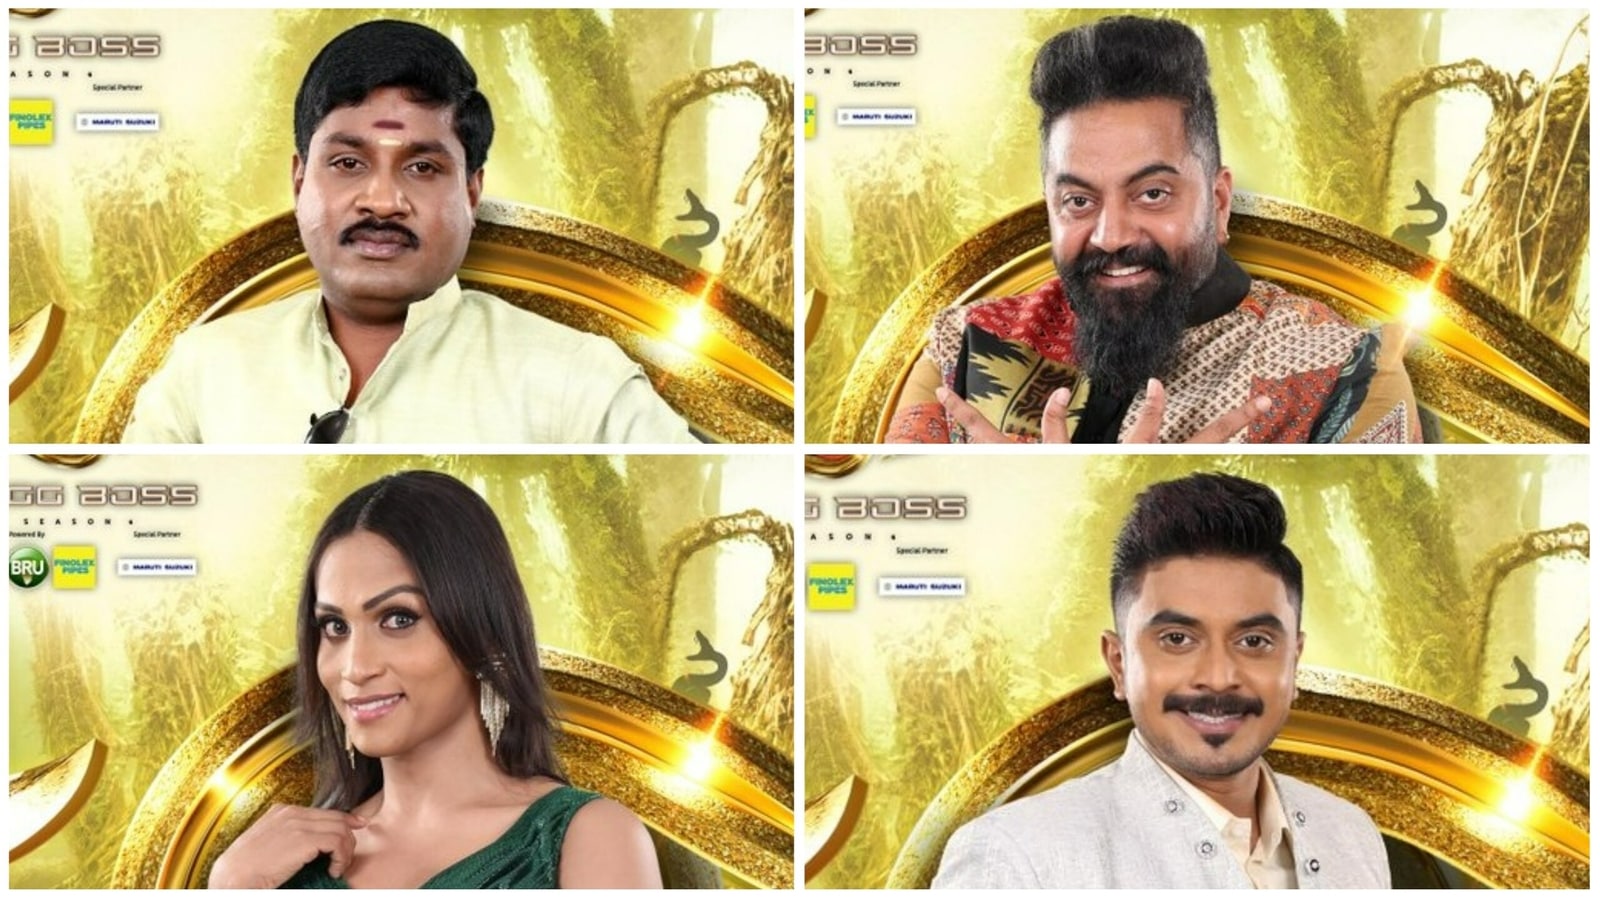 Bigg Boss Tamil 6 Kamal Haasan Returns As Host 20 Contestants Enter House Hindustan Times